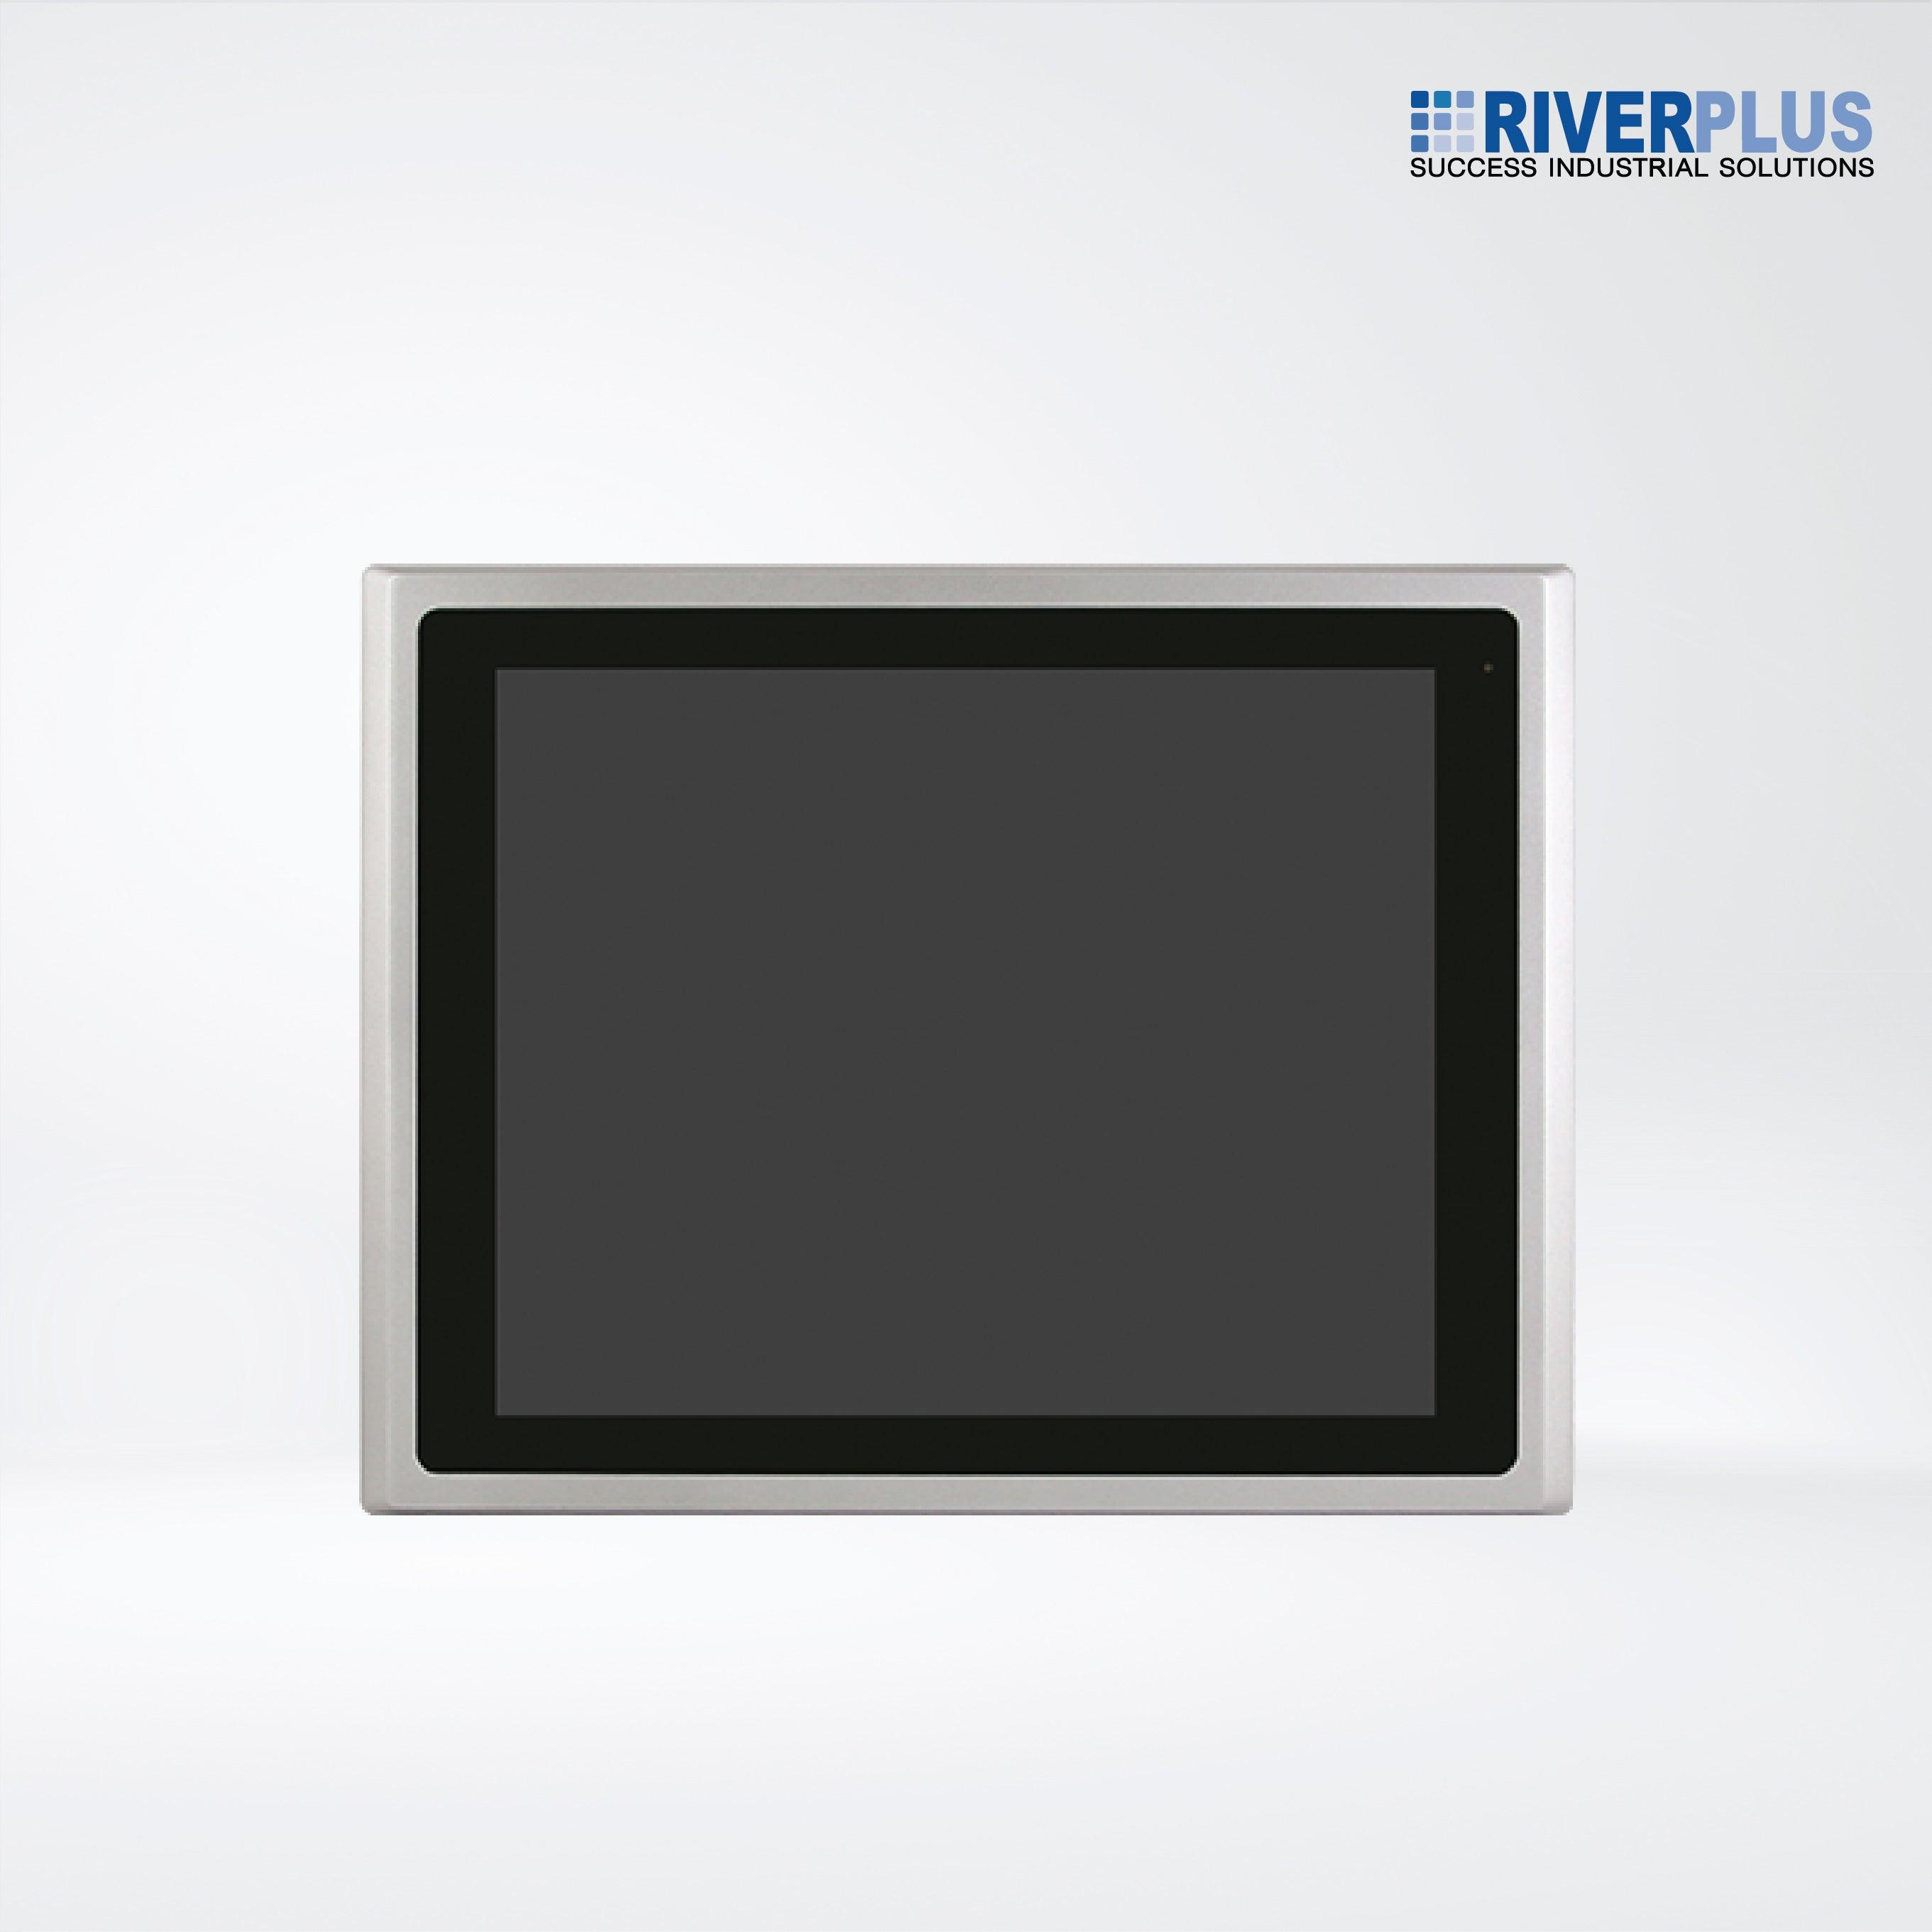 ARCHMI-917ARH 6th Gen. Intel Core i3/i5, Fanless Industrial Compact Size Panel PC - Riverplus